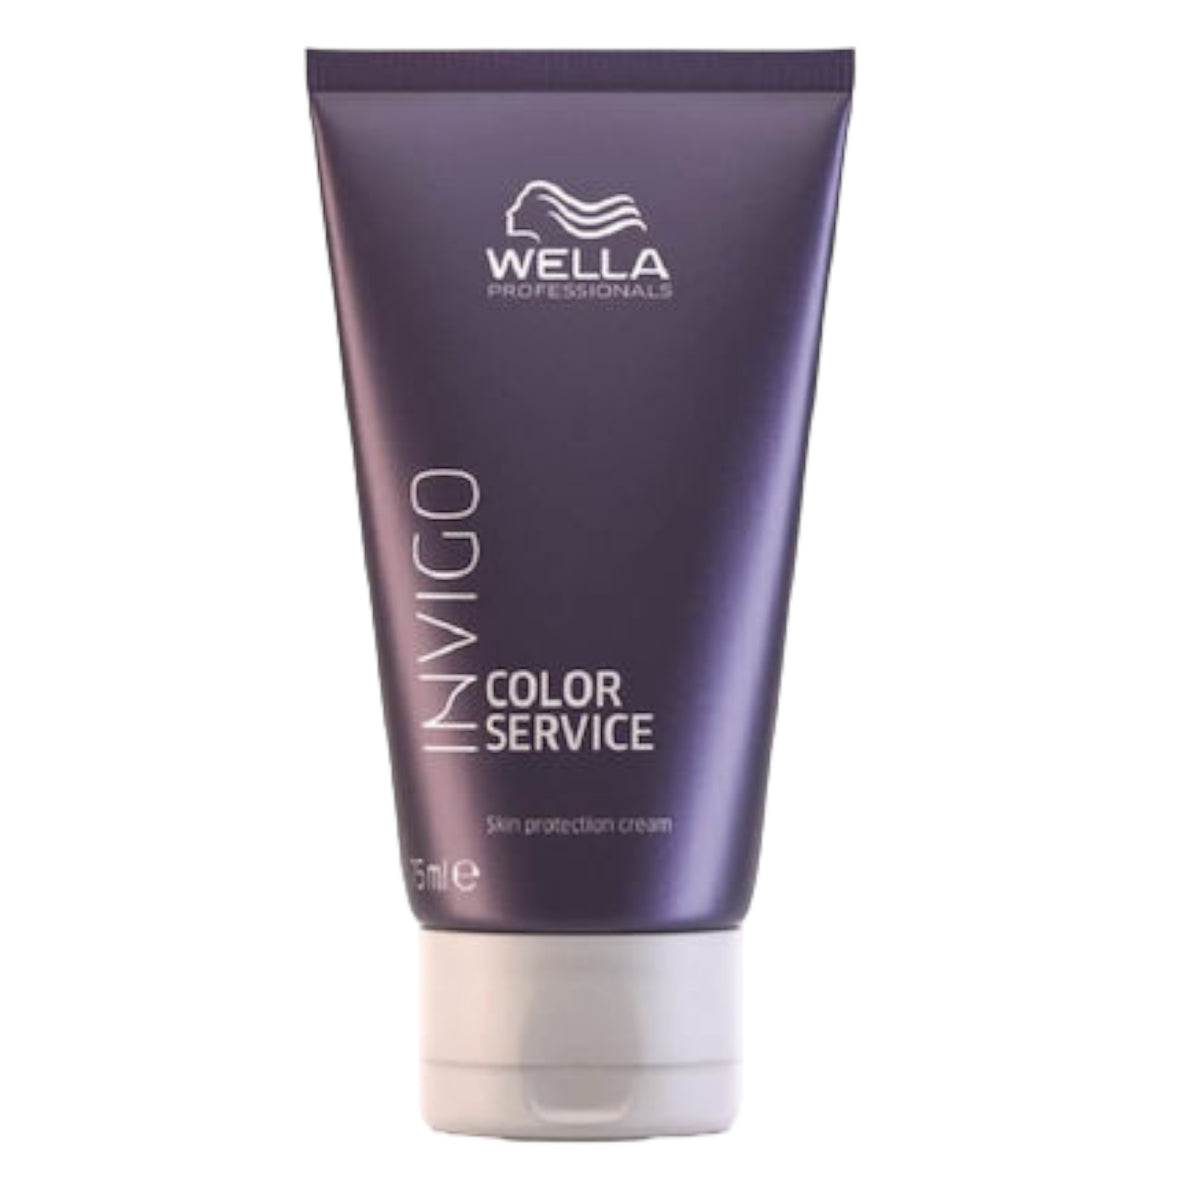 Wella Professionals Color Service Κρέμα Προστασίας 75ml